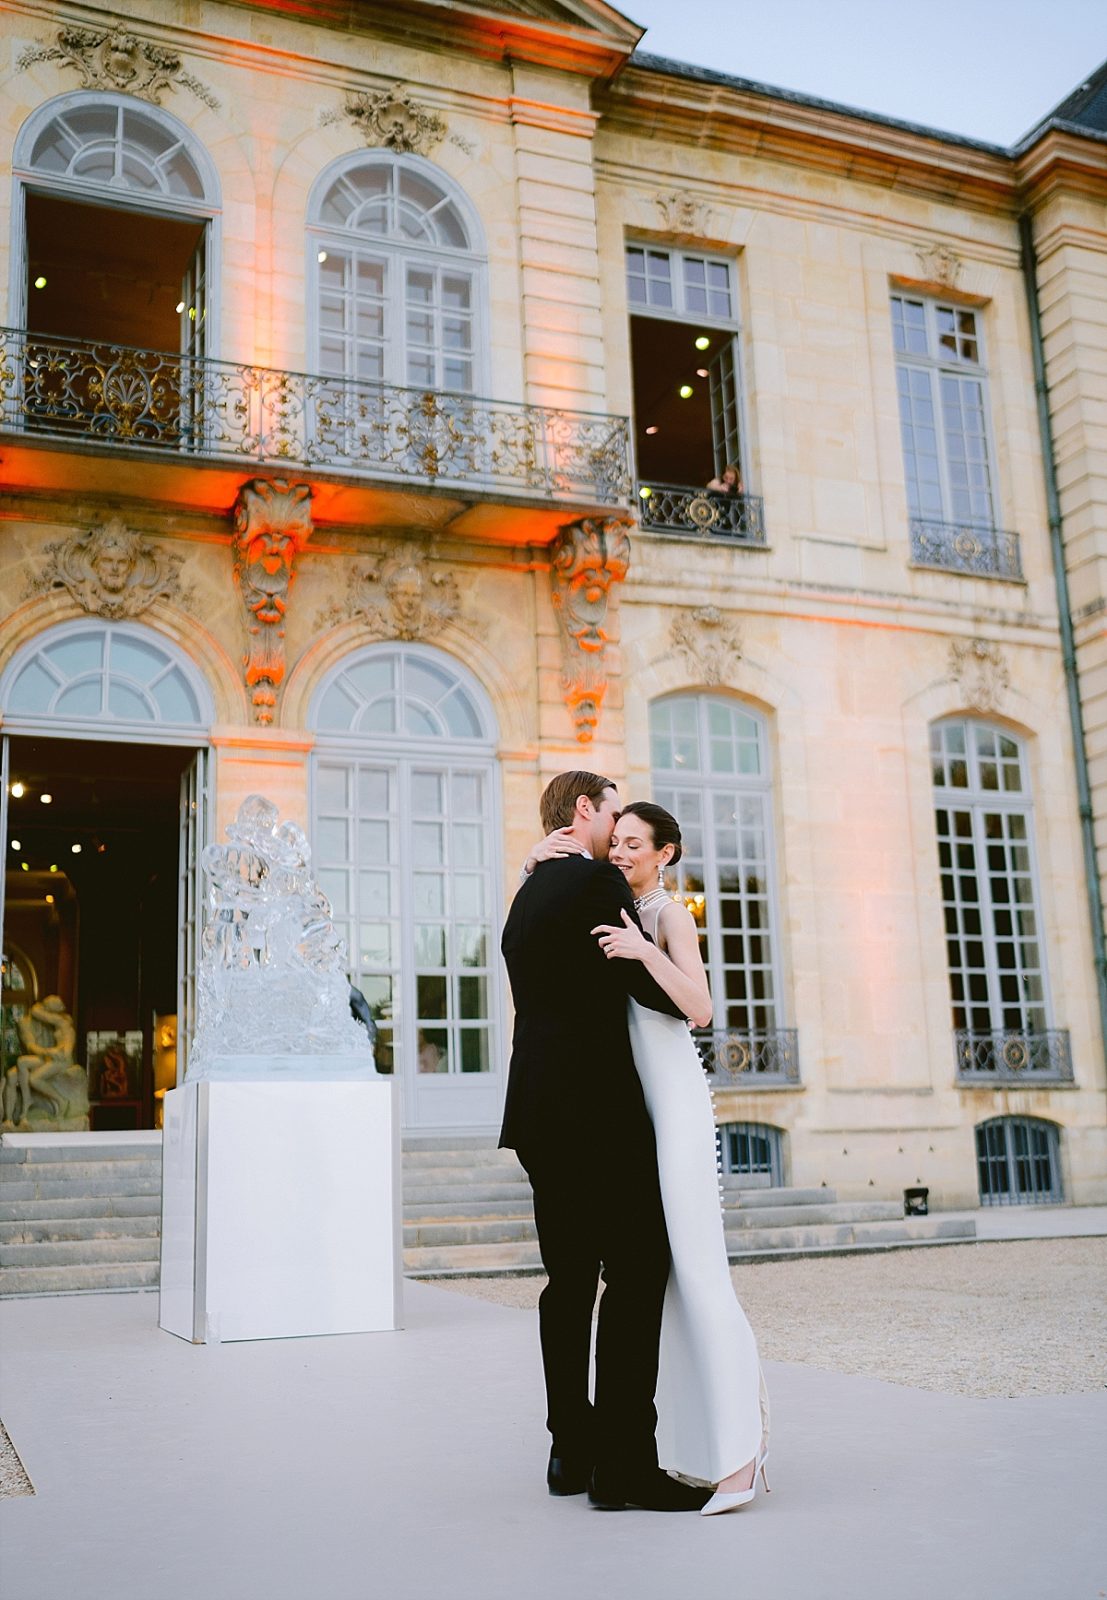 A Musee Rodin Luxury Wedding in Paris - Audrey